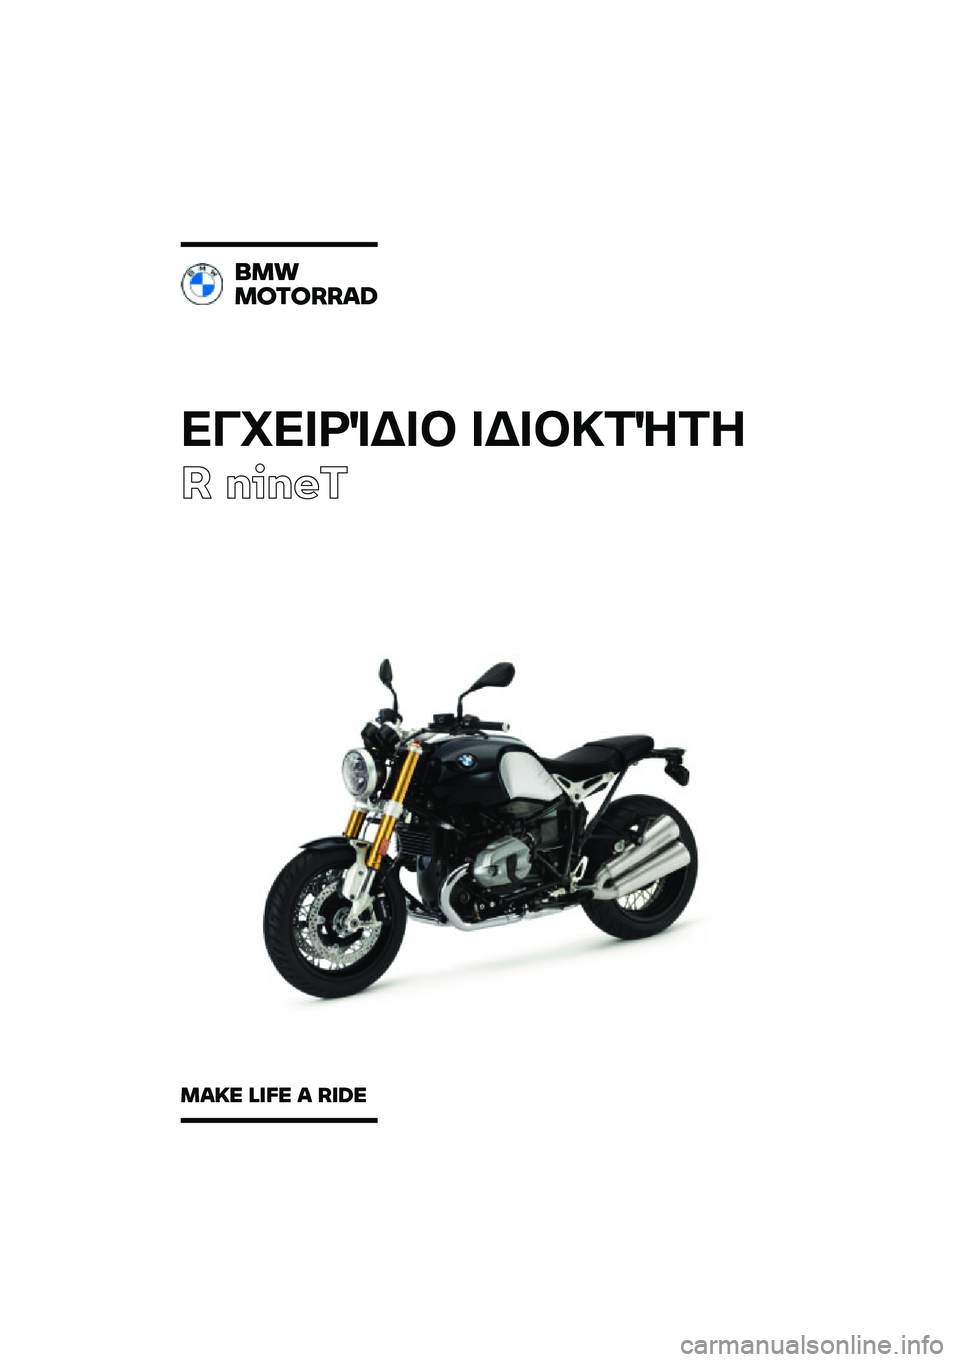 BMW MOTORRAD R NINE T 2021  Εγχειρίδιο ιδιοκτήτη (in Greek) ��������\b��	 ��\b��	�
��\f��
� �����
���
�������\b�	
��\b�
� �\f�
�� �\b ��
�	� 